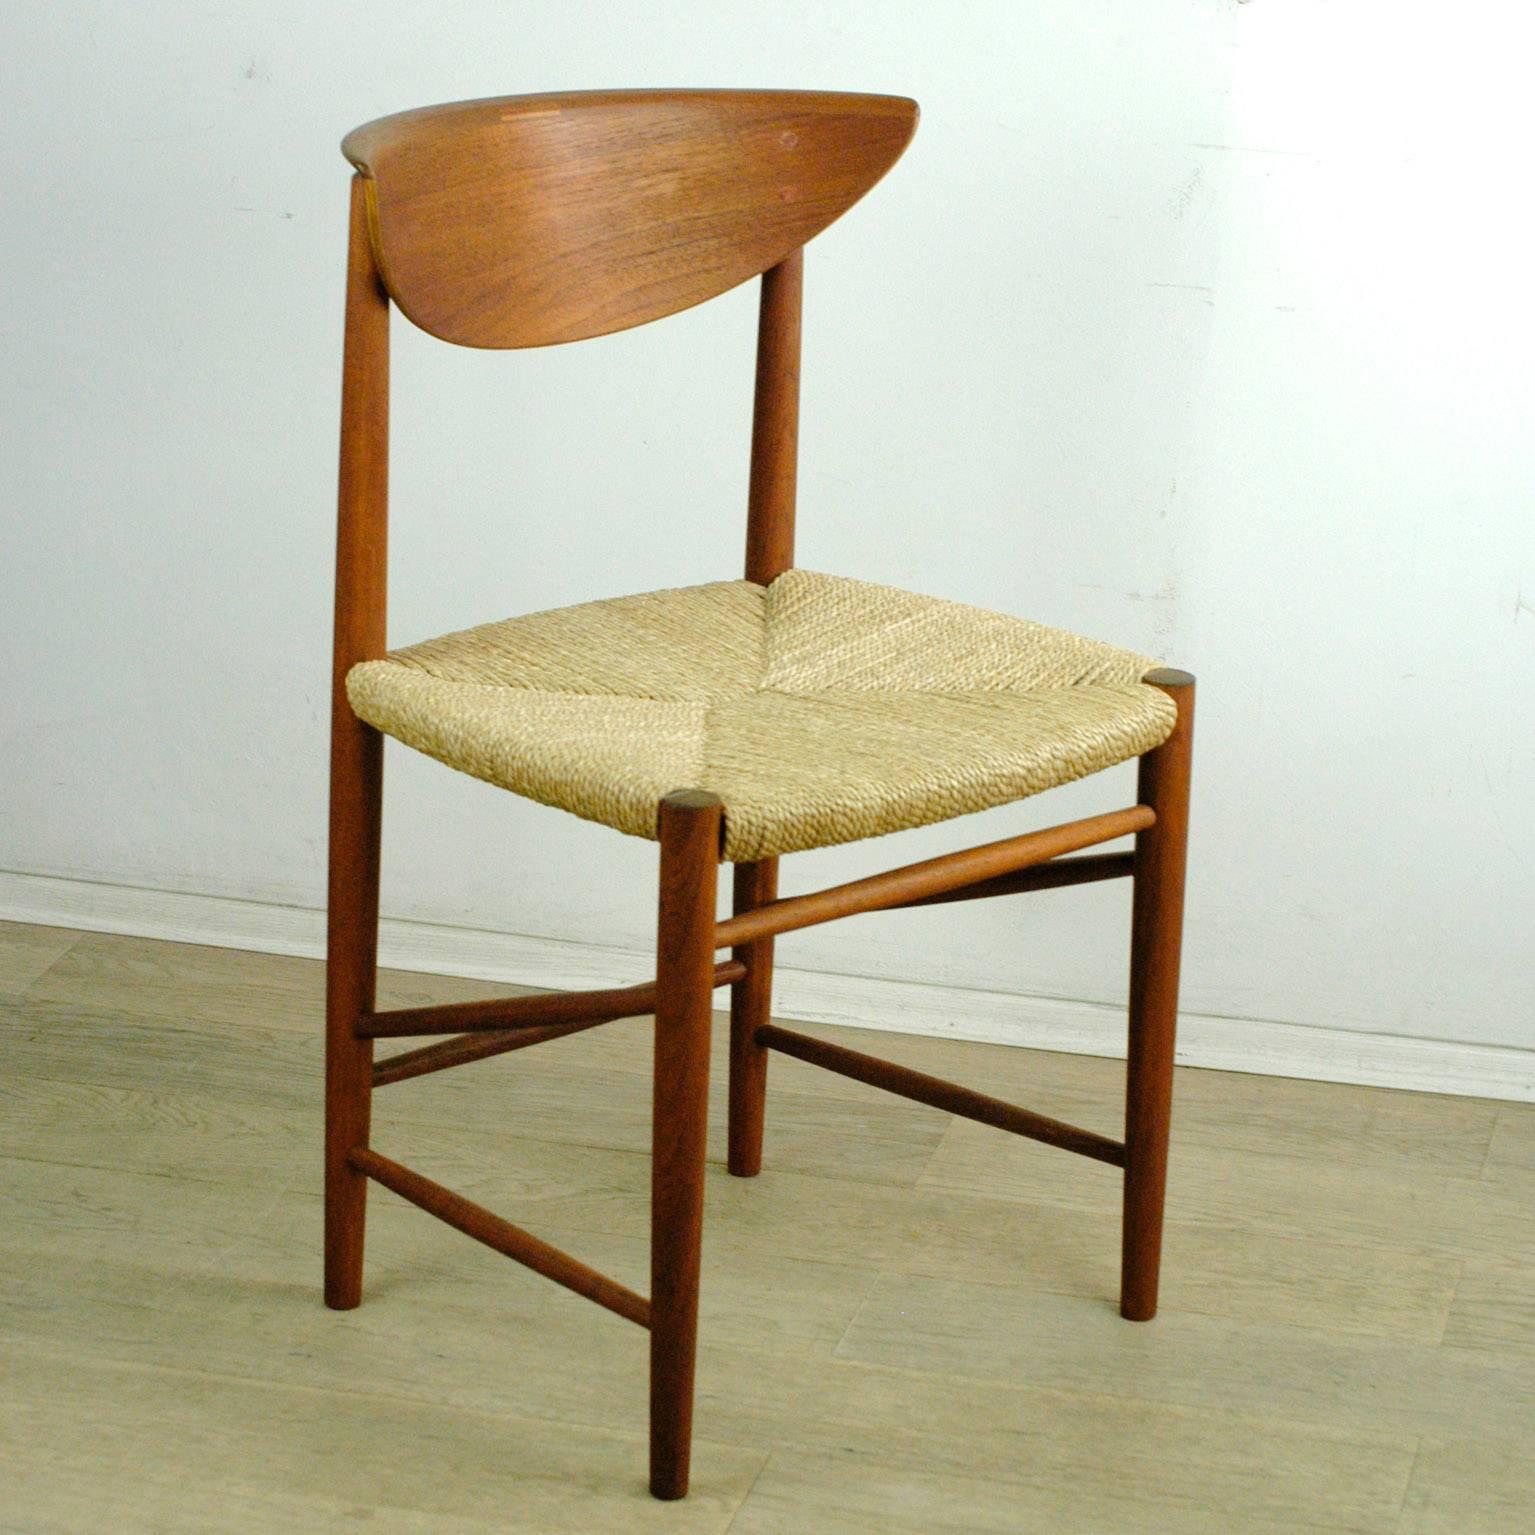 Danish Scandinavian Modern Mod. 313 Teak Chair designed by Peter Hvidt